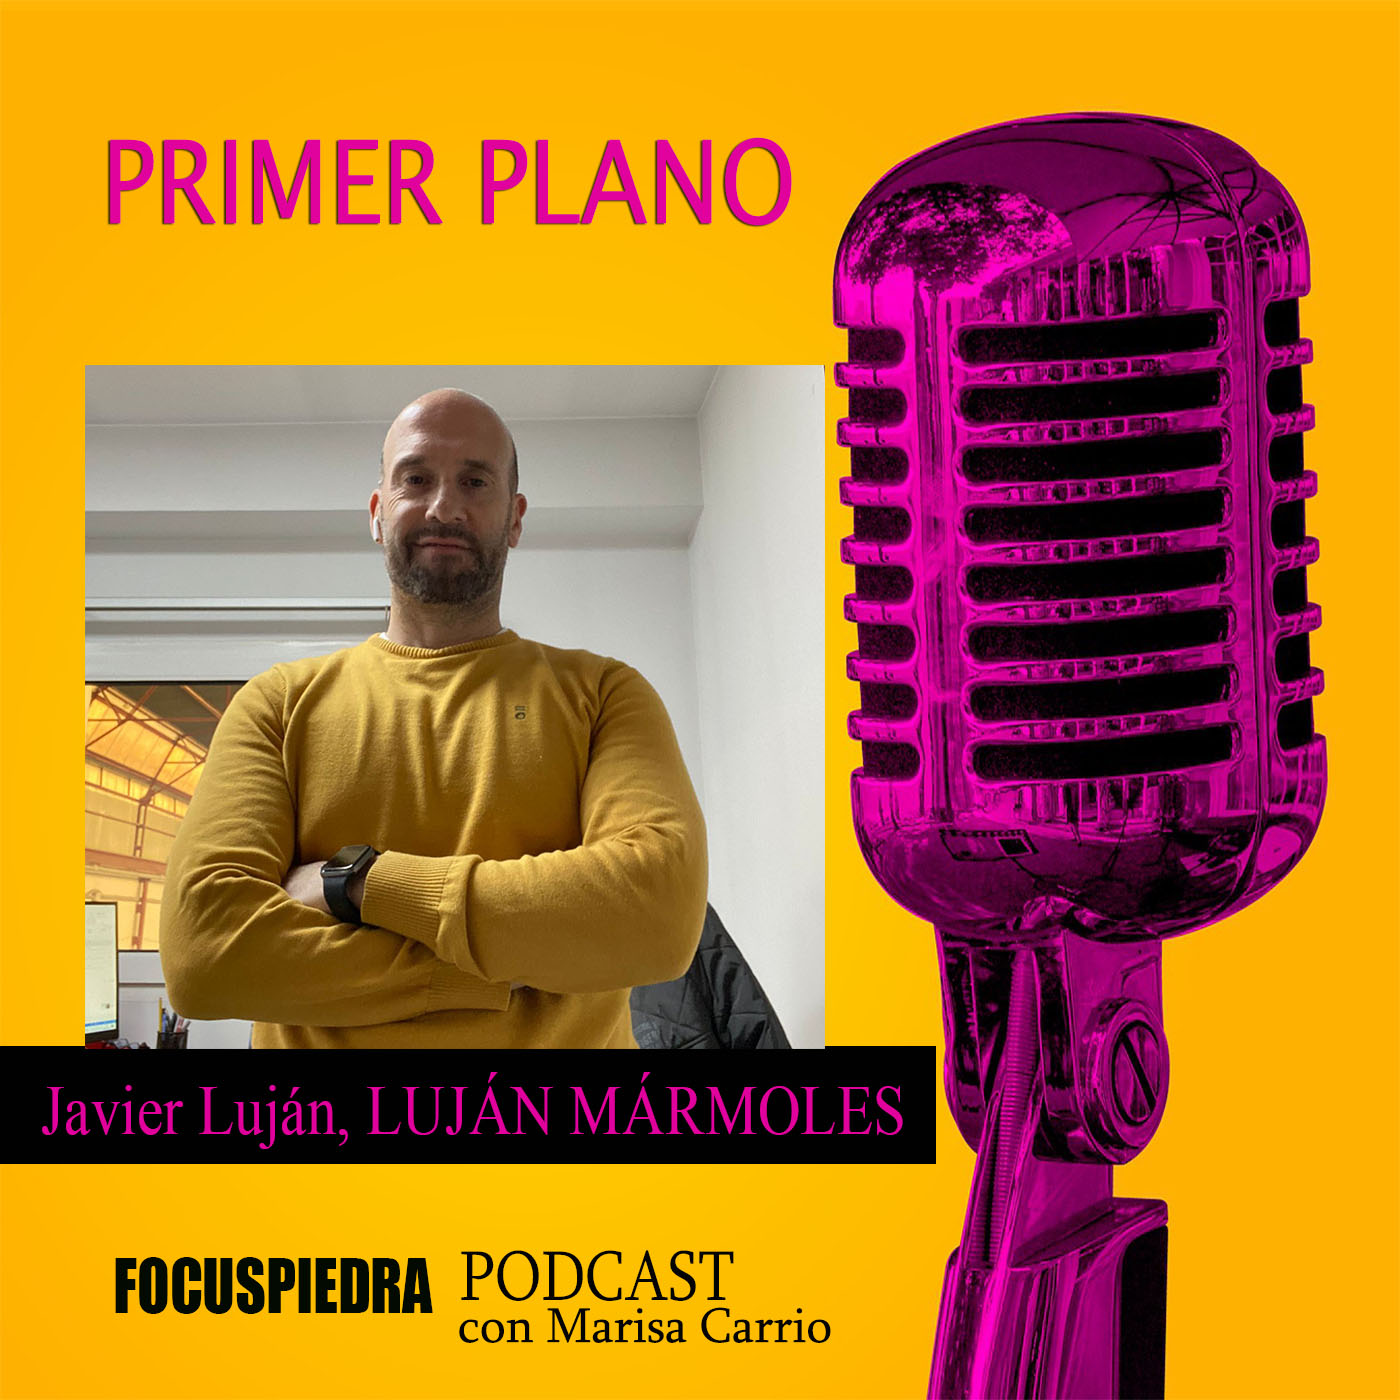 Podcast PRIMER PLANO I Episodio 5: "Triunfar en Madrid fabricando encimeras a 457 Km"